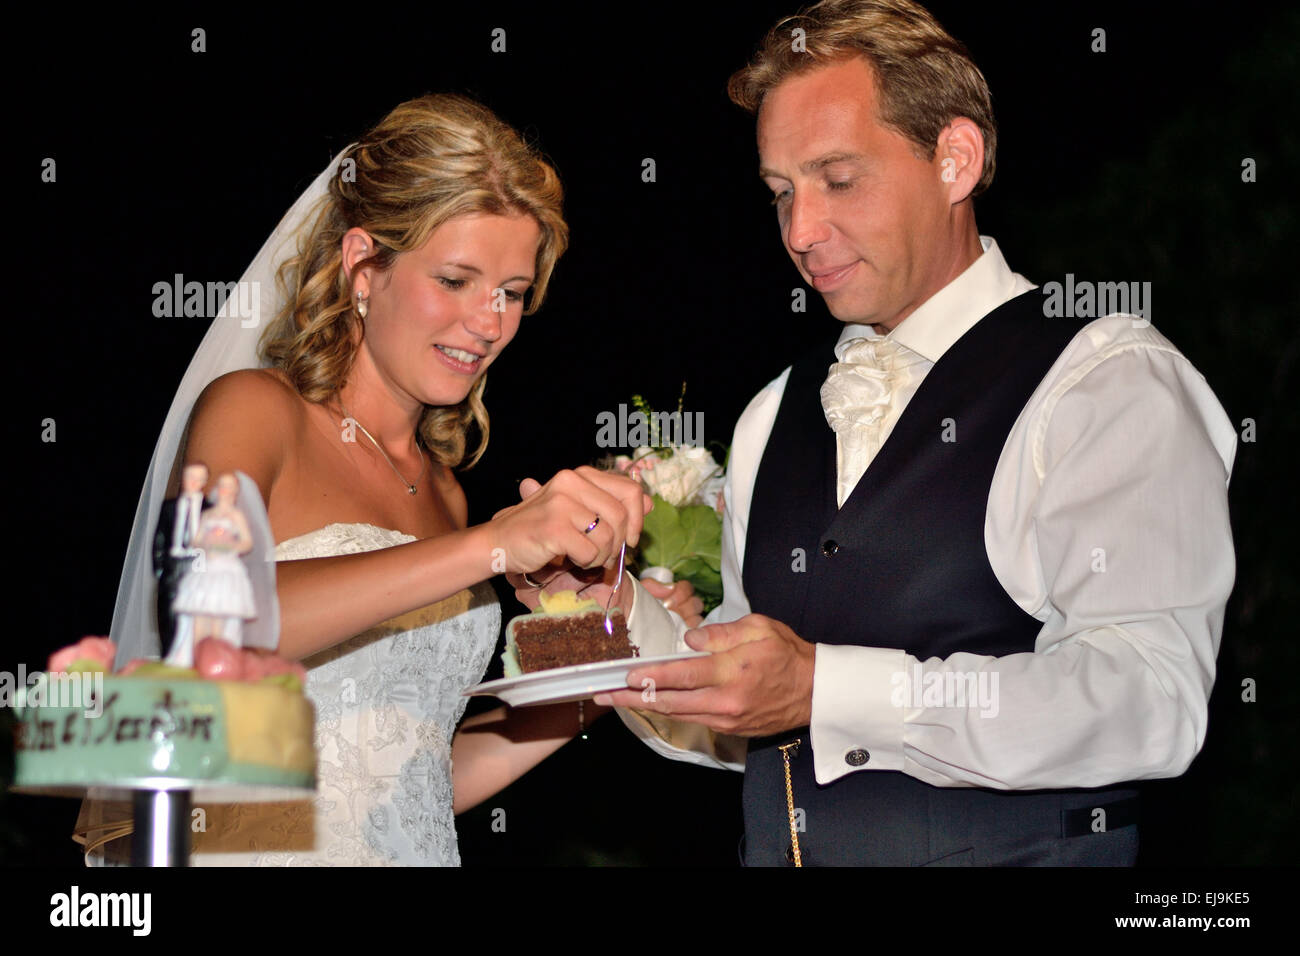 Bride and groom eating wedding cake Stock Photo